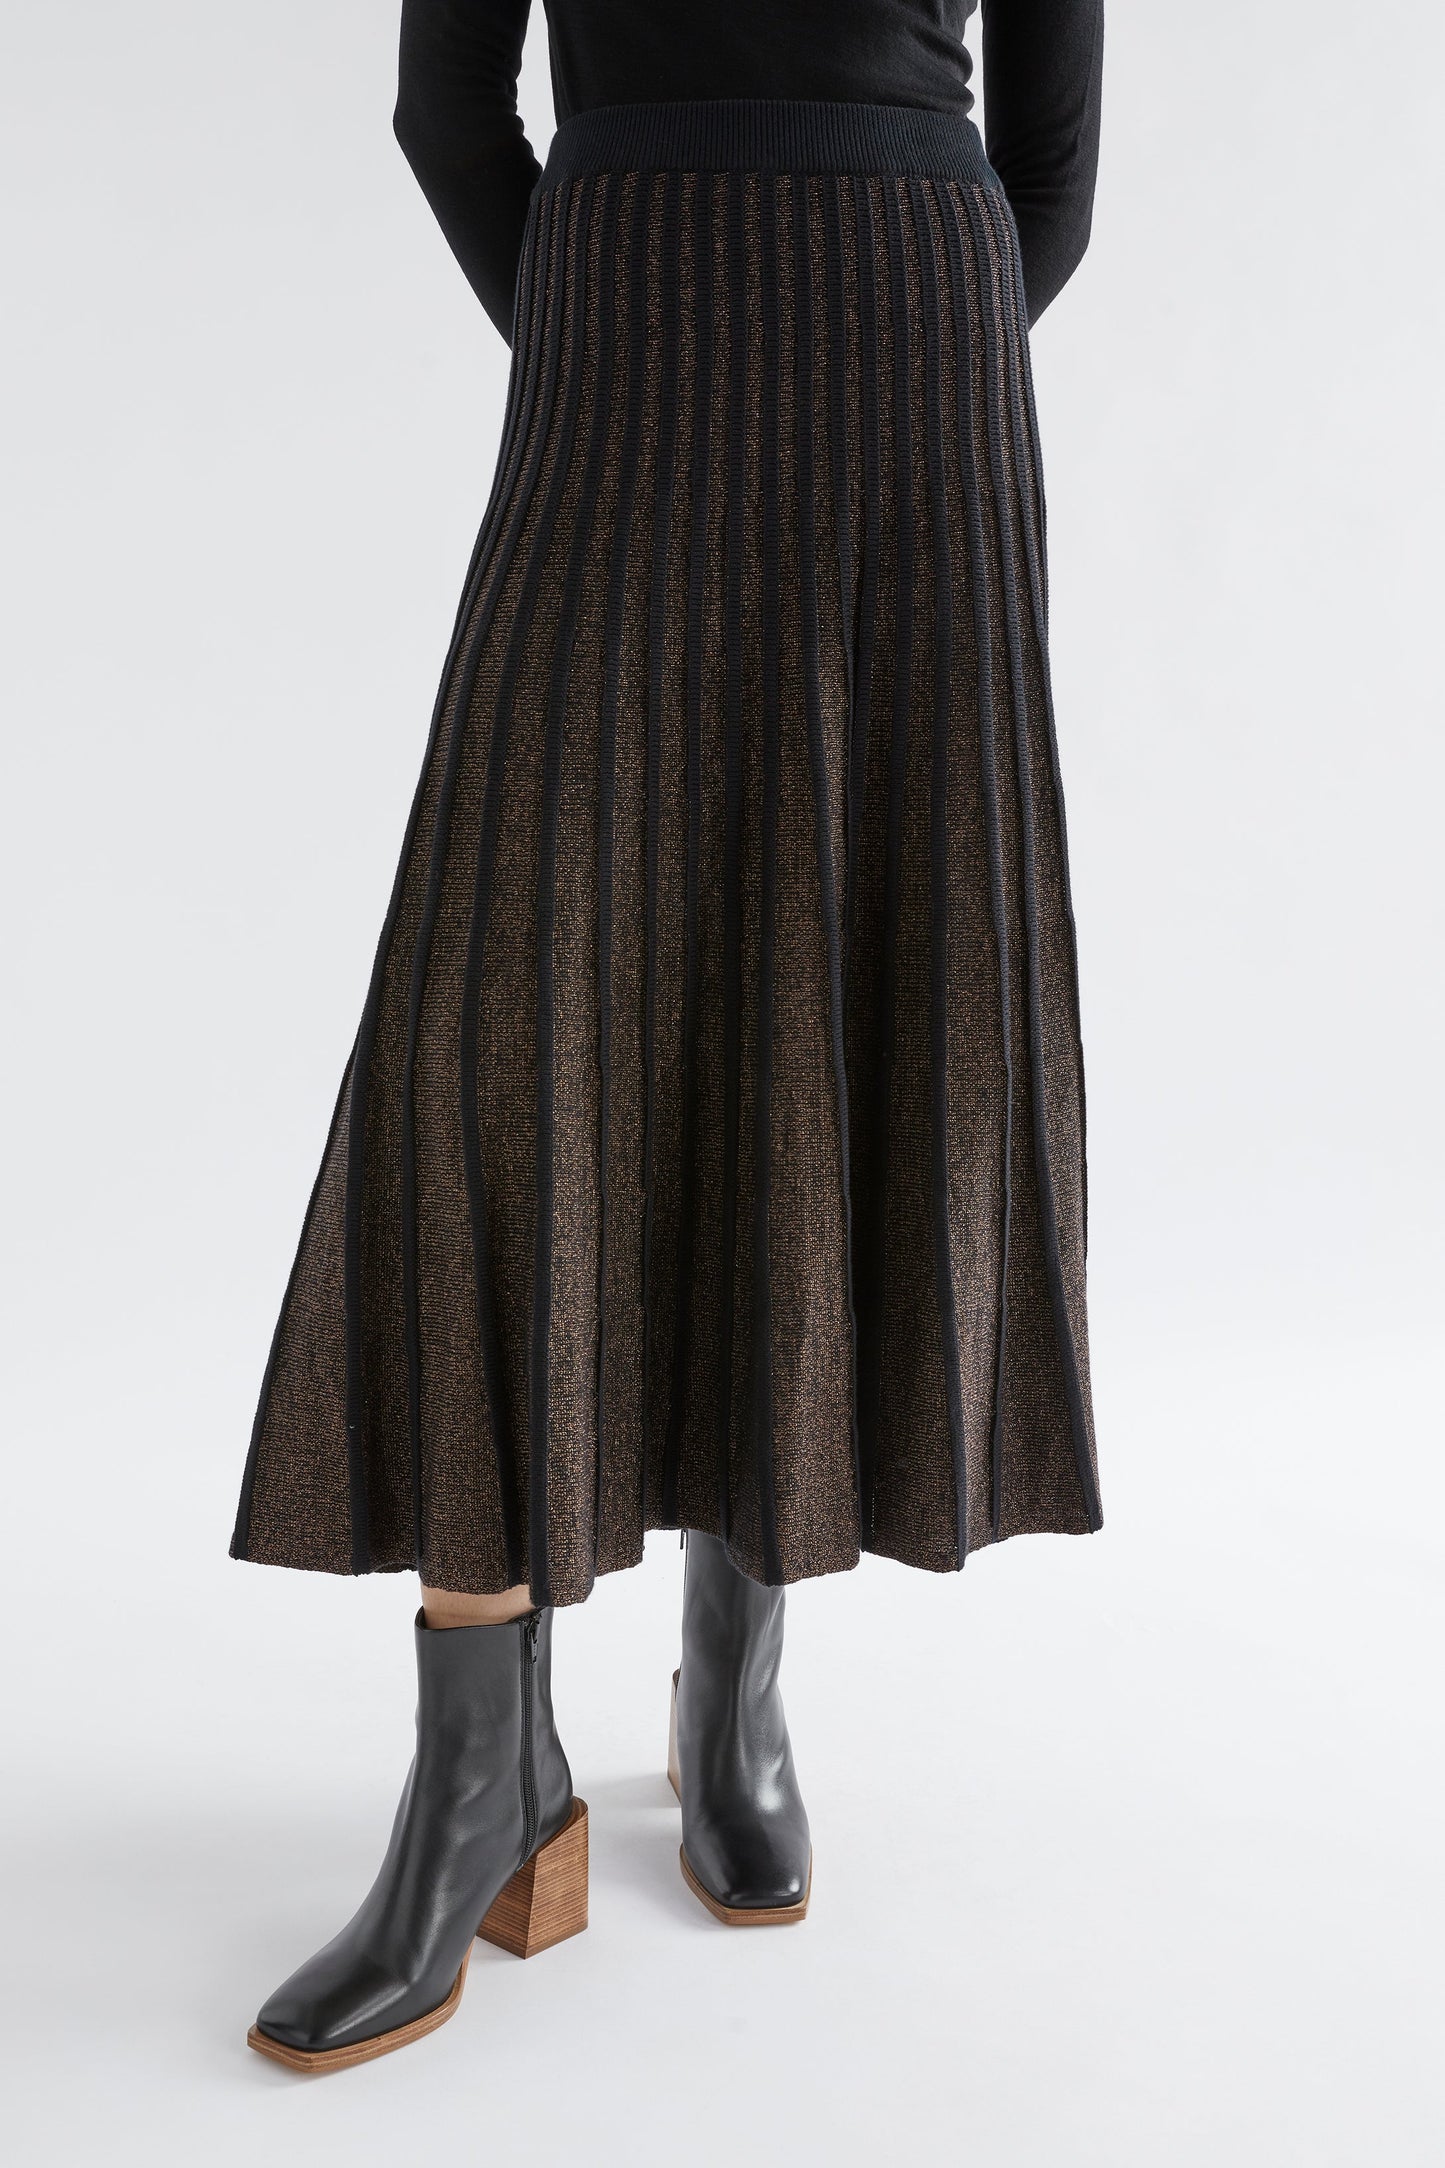 Glittra Lurex Knit Metallic A-Line Skirt Model Front Full Body | GOLDEN METALLIC